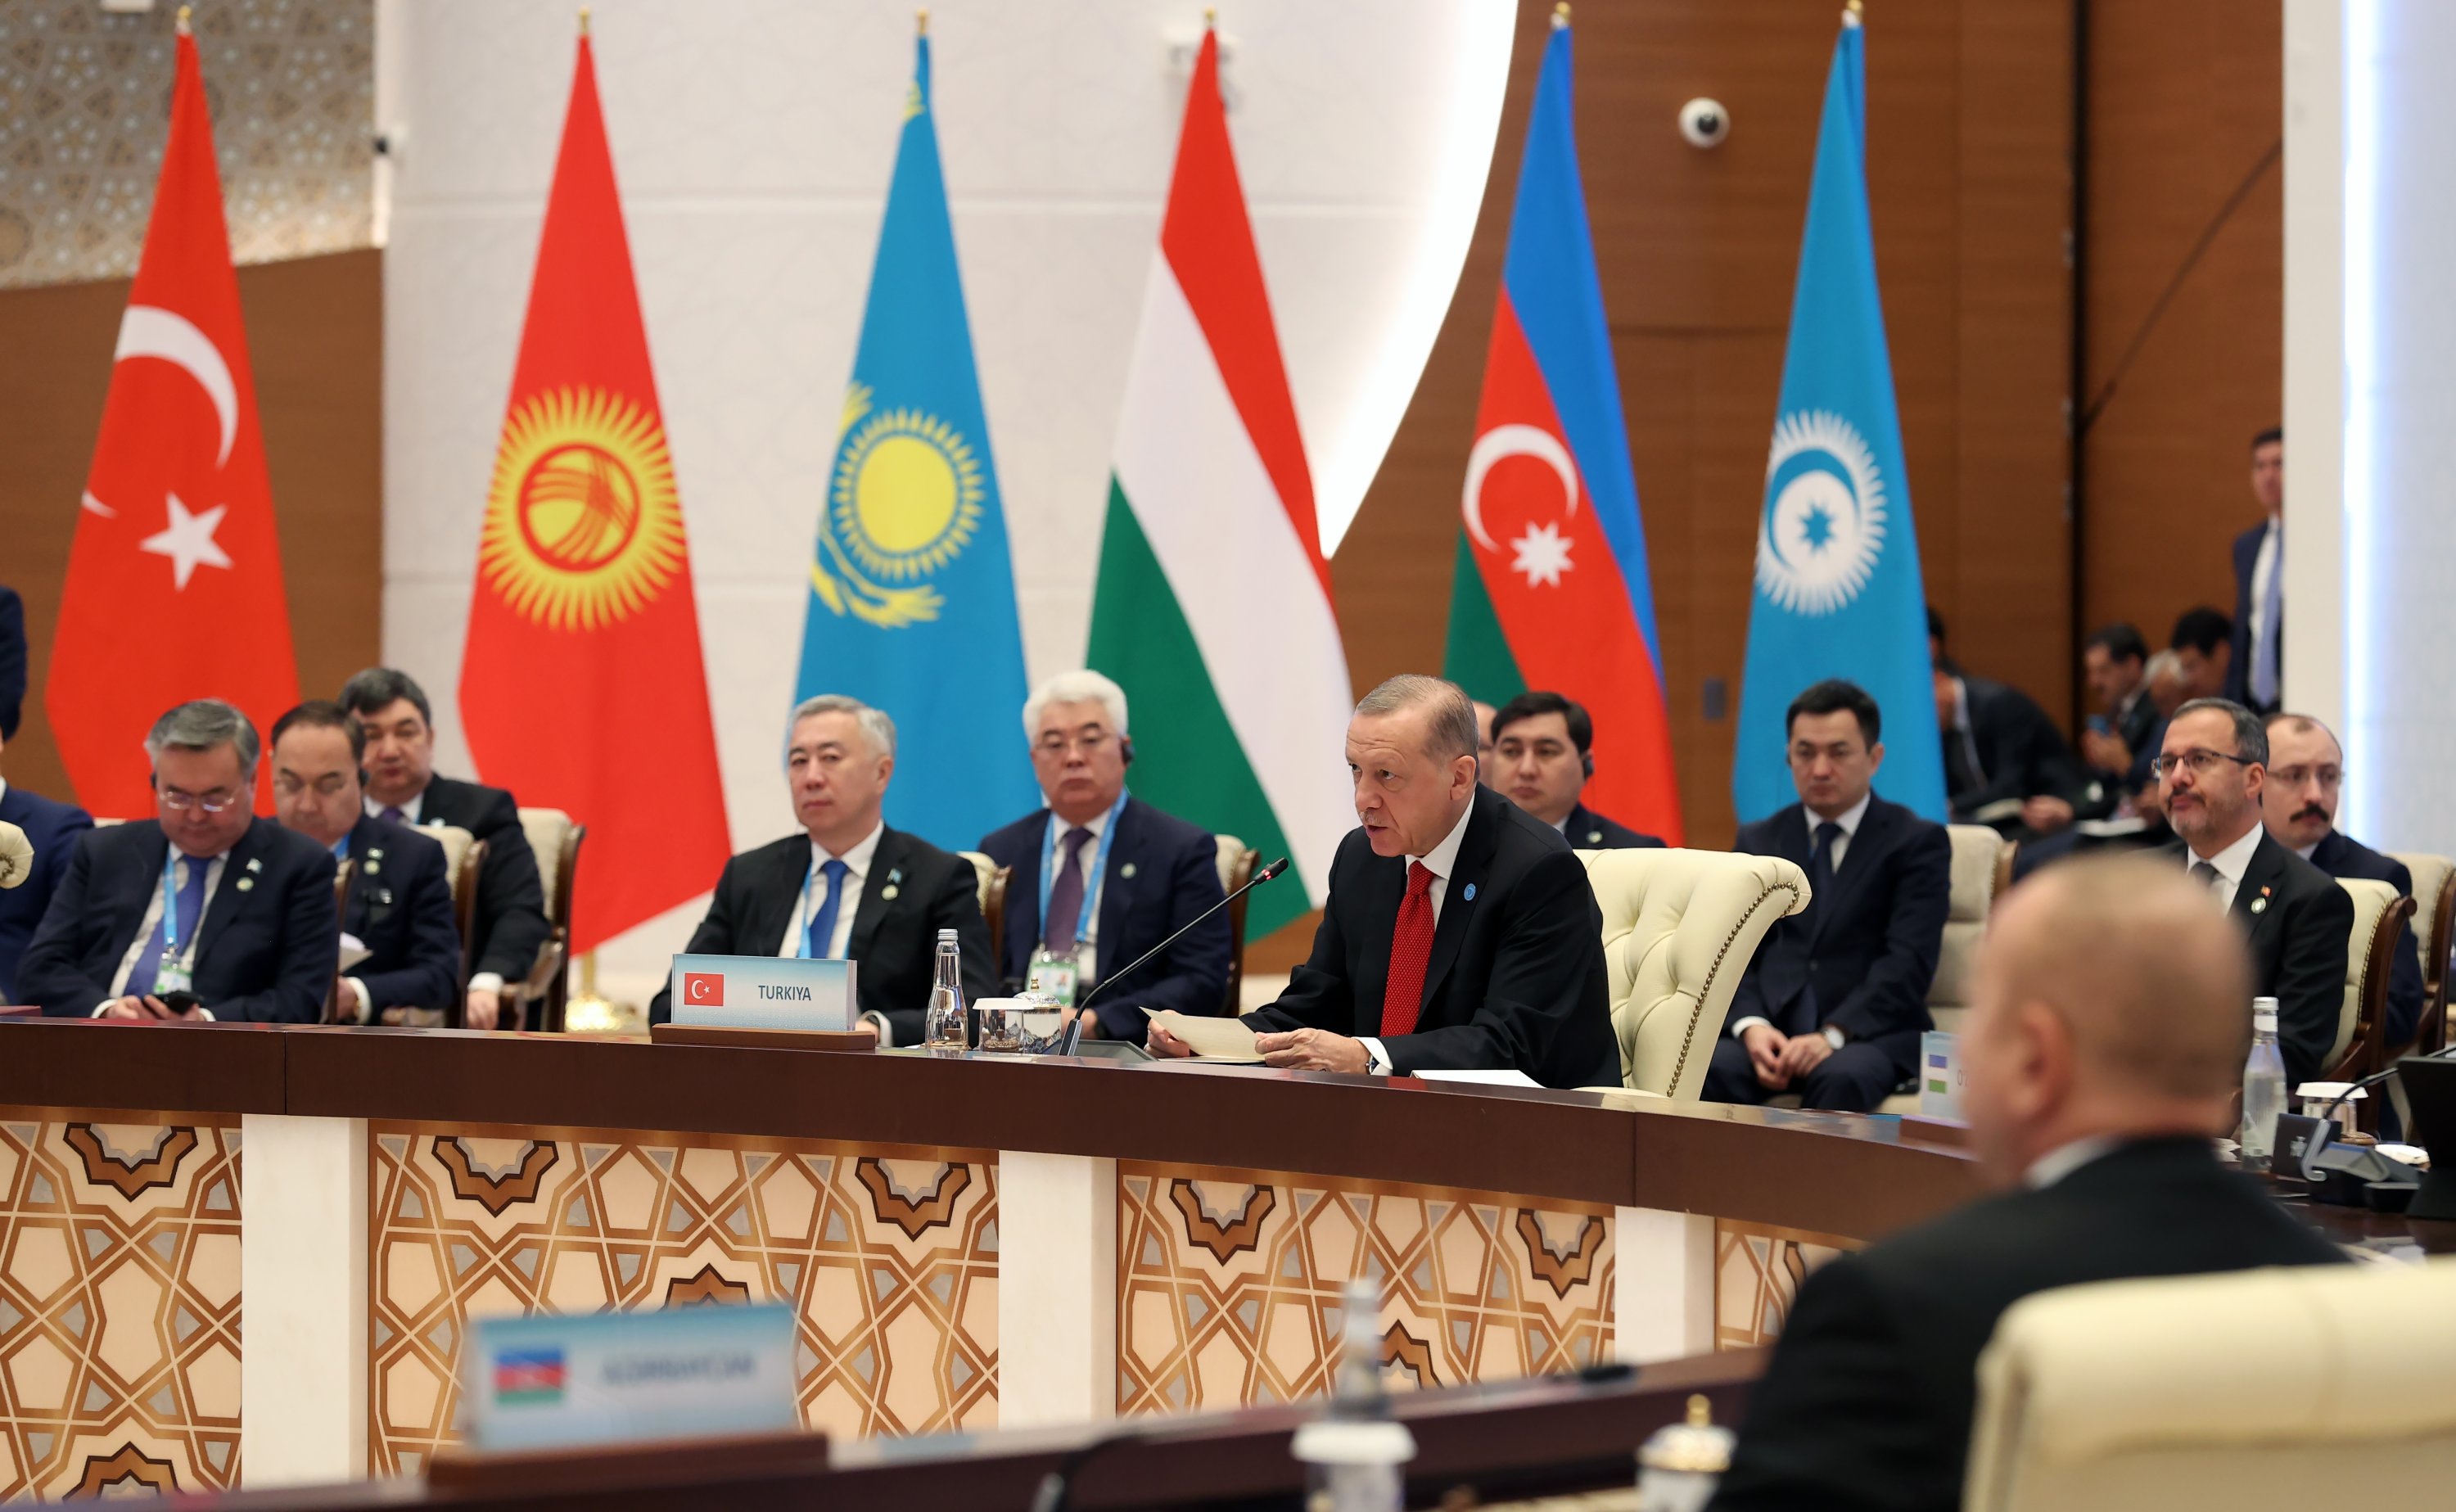 Turkic states should develop common security concept, Erdoğan says